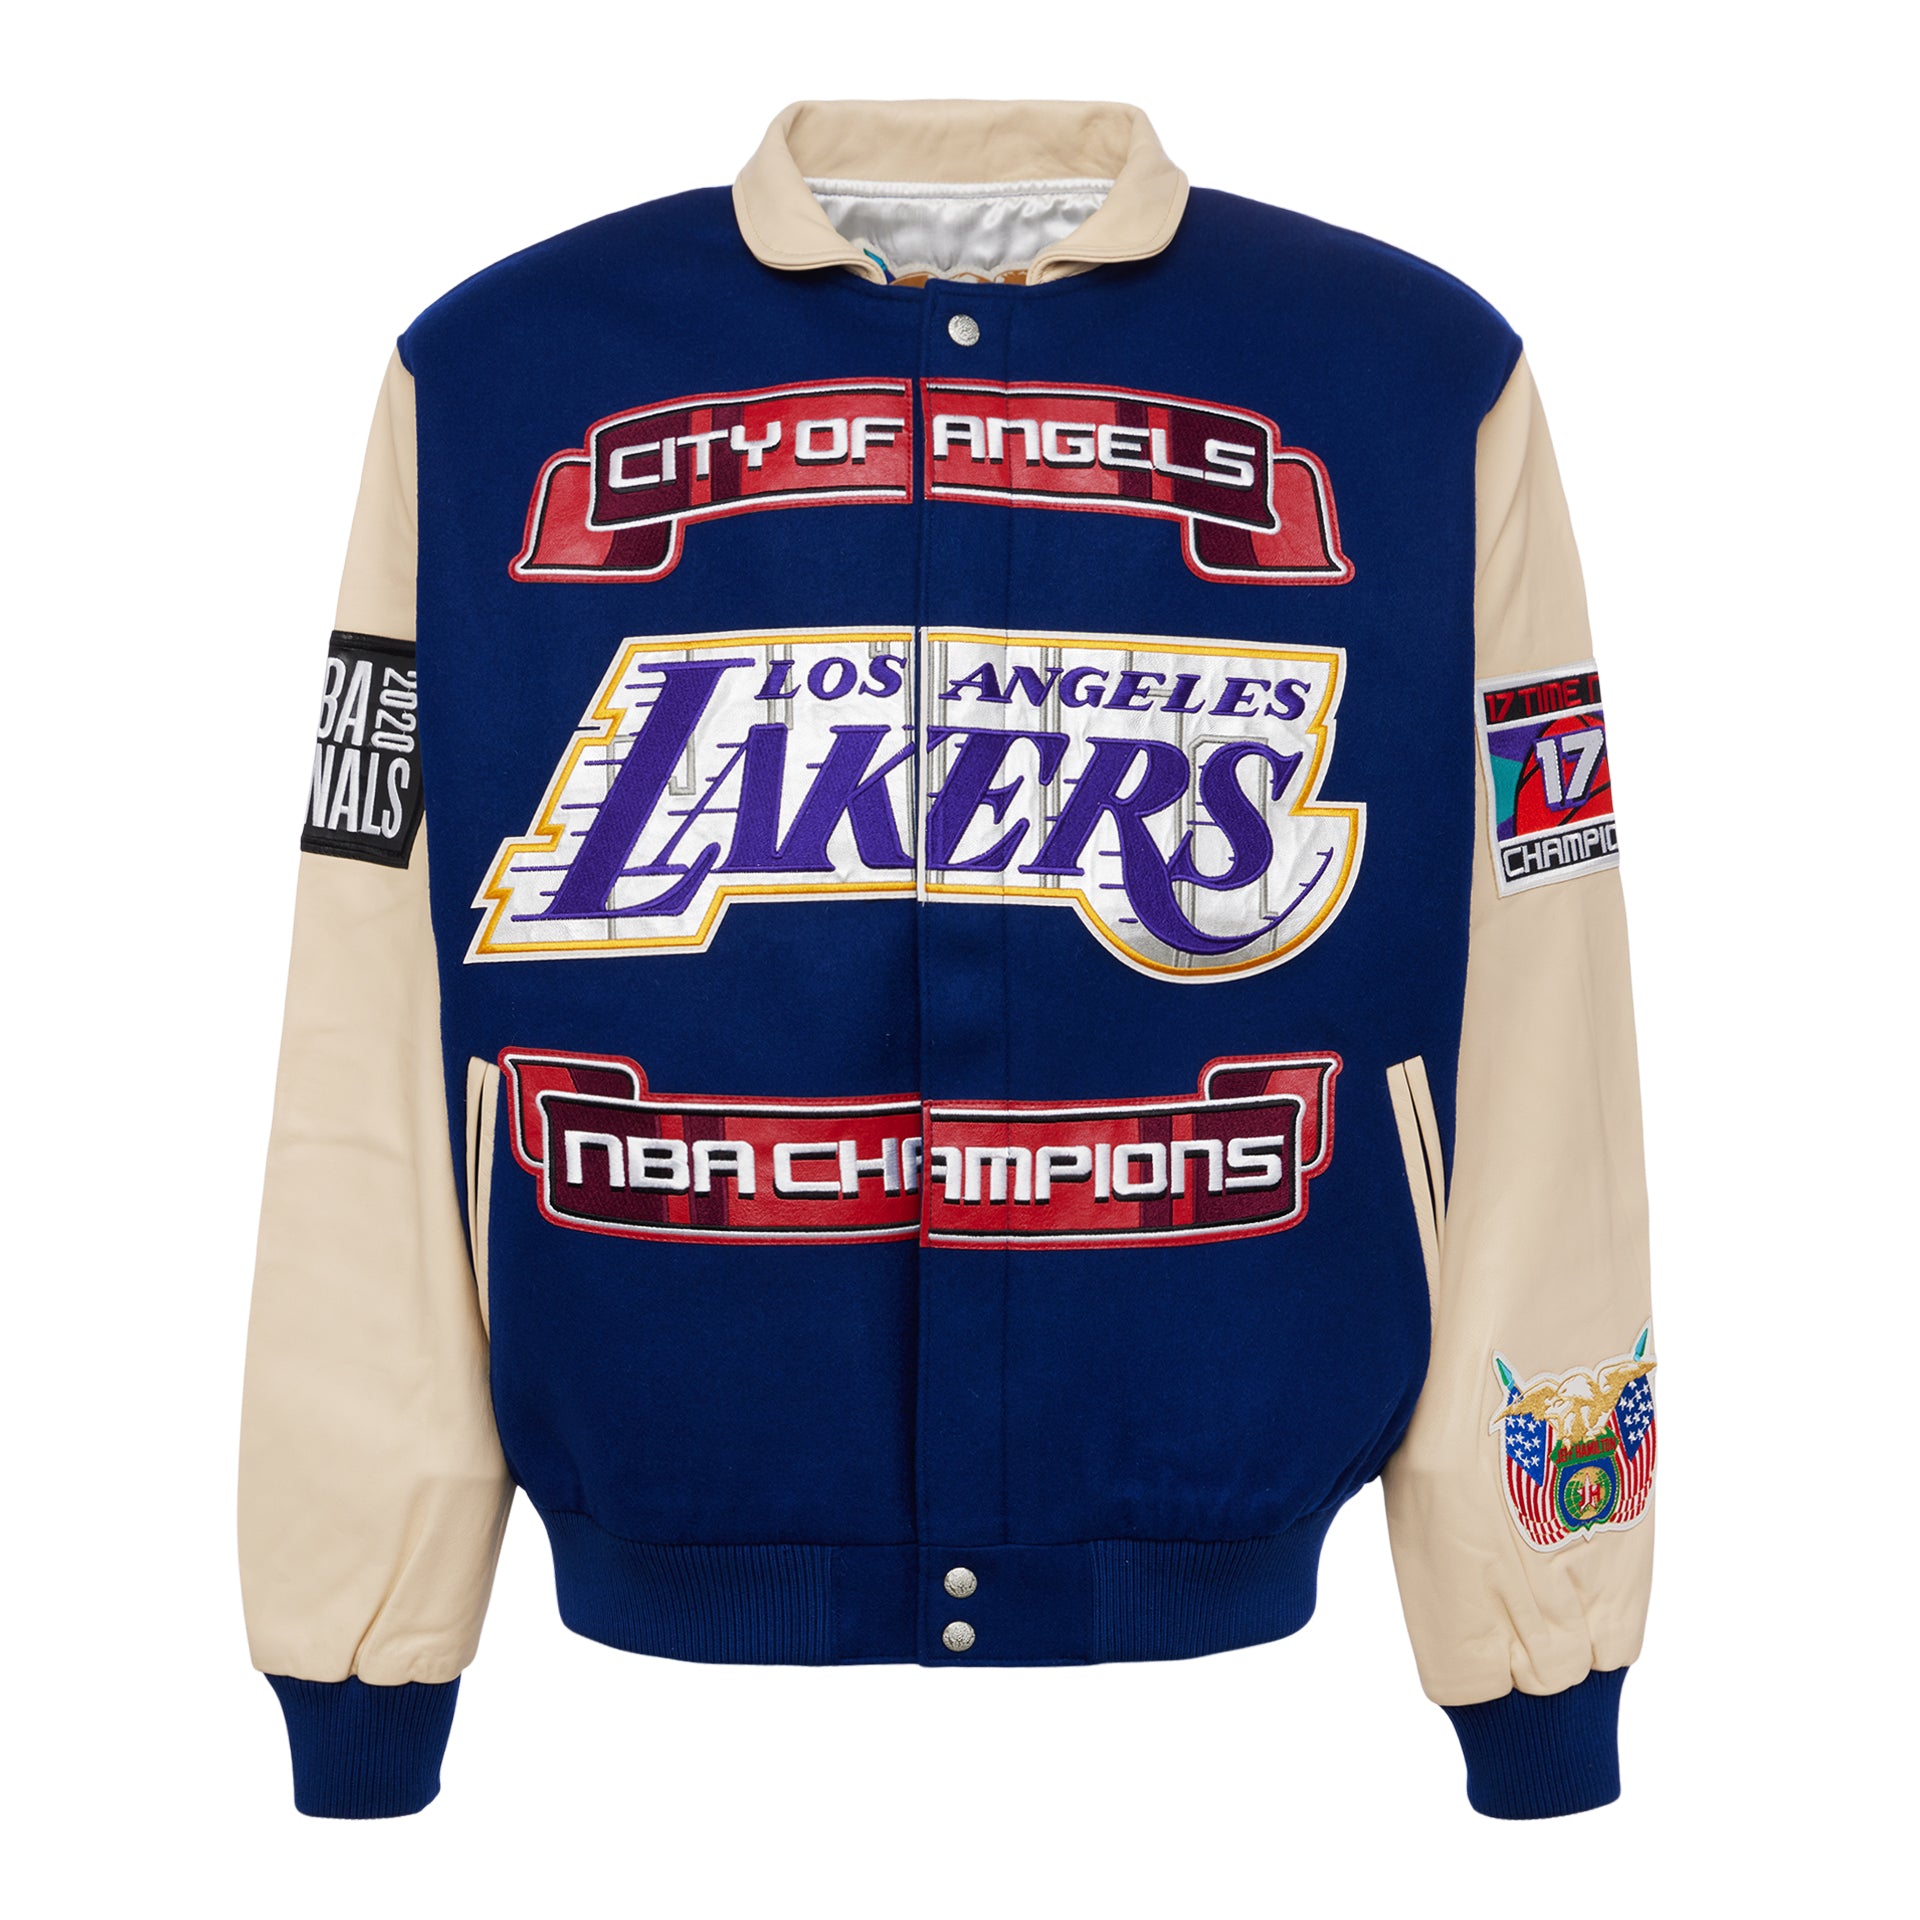 Los Angeles Lakers Championship Jacket